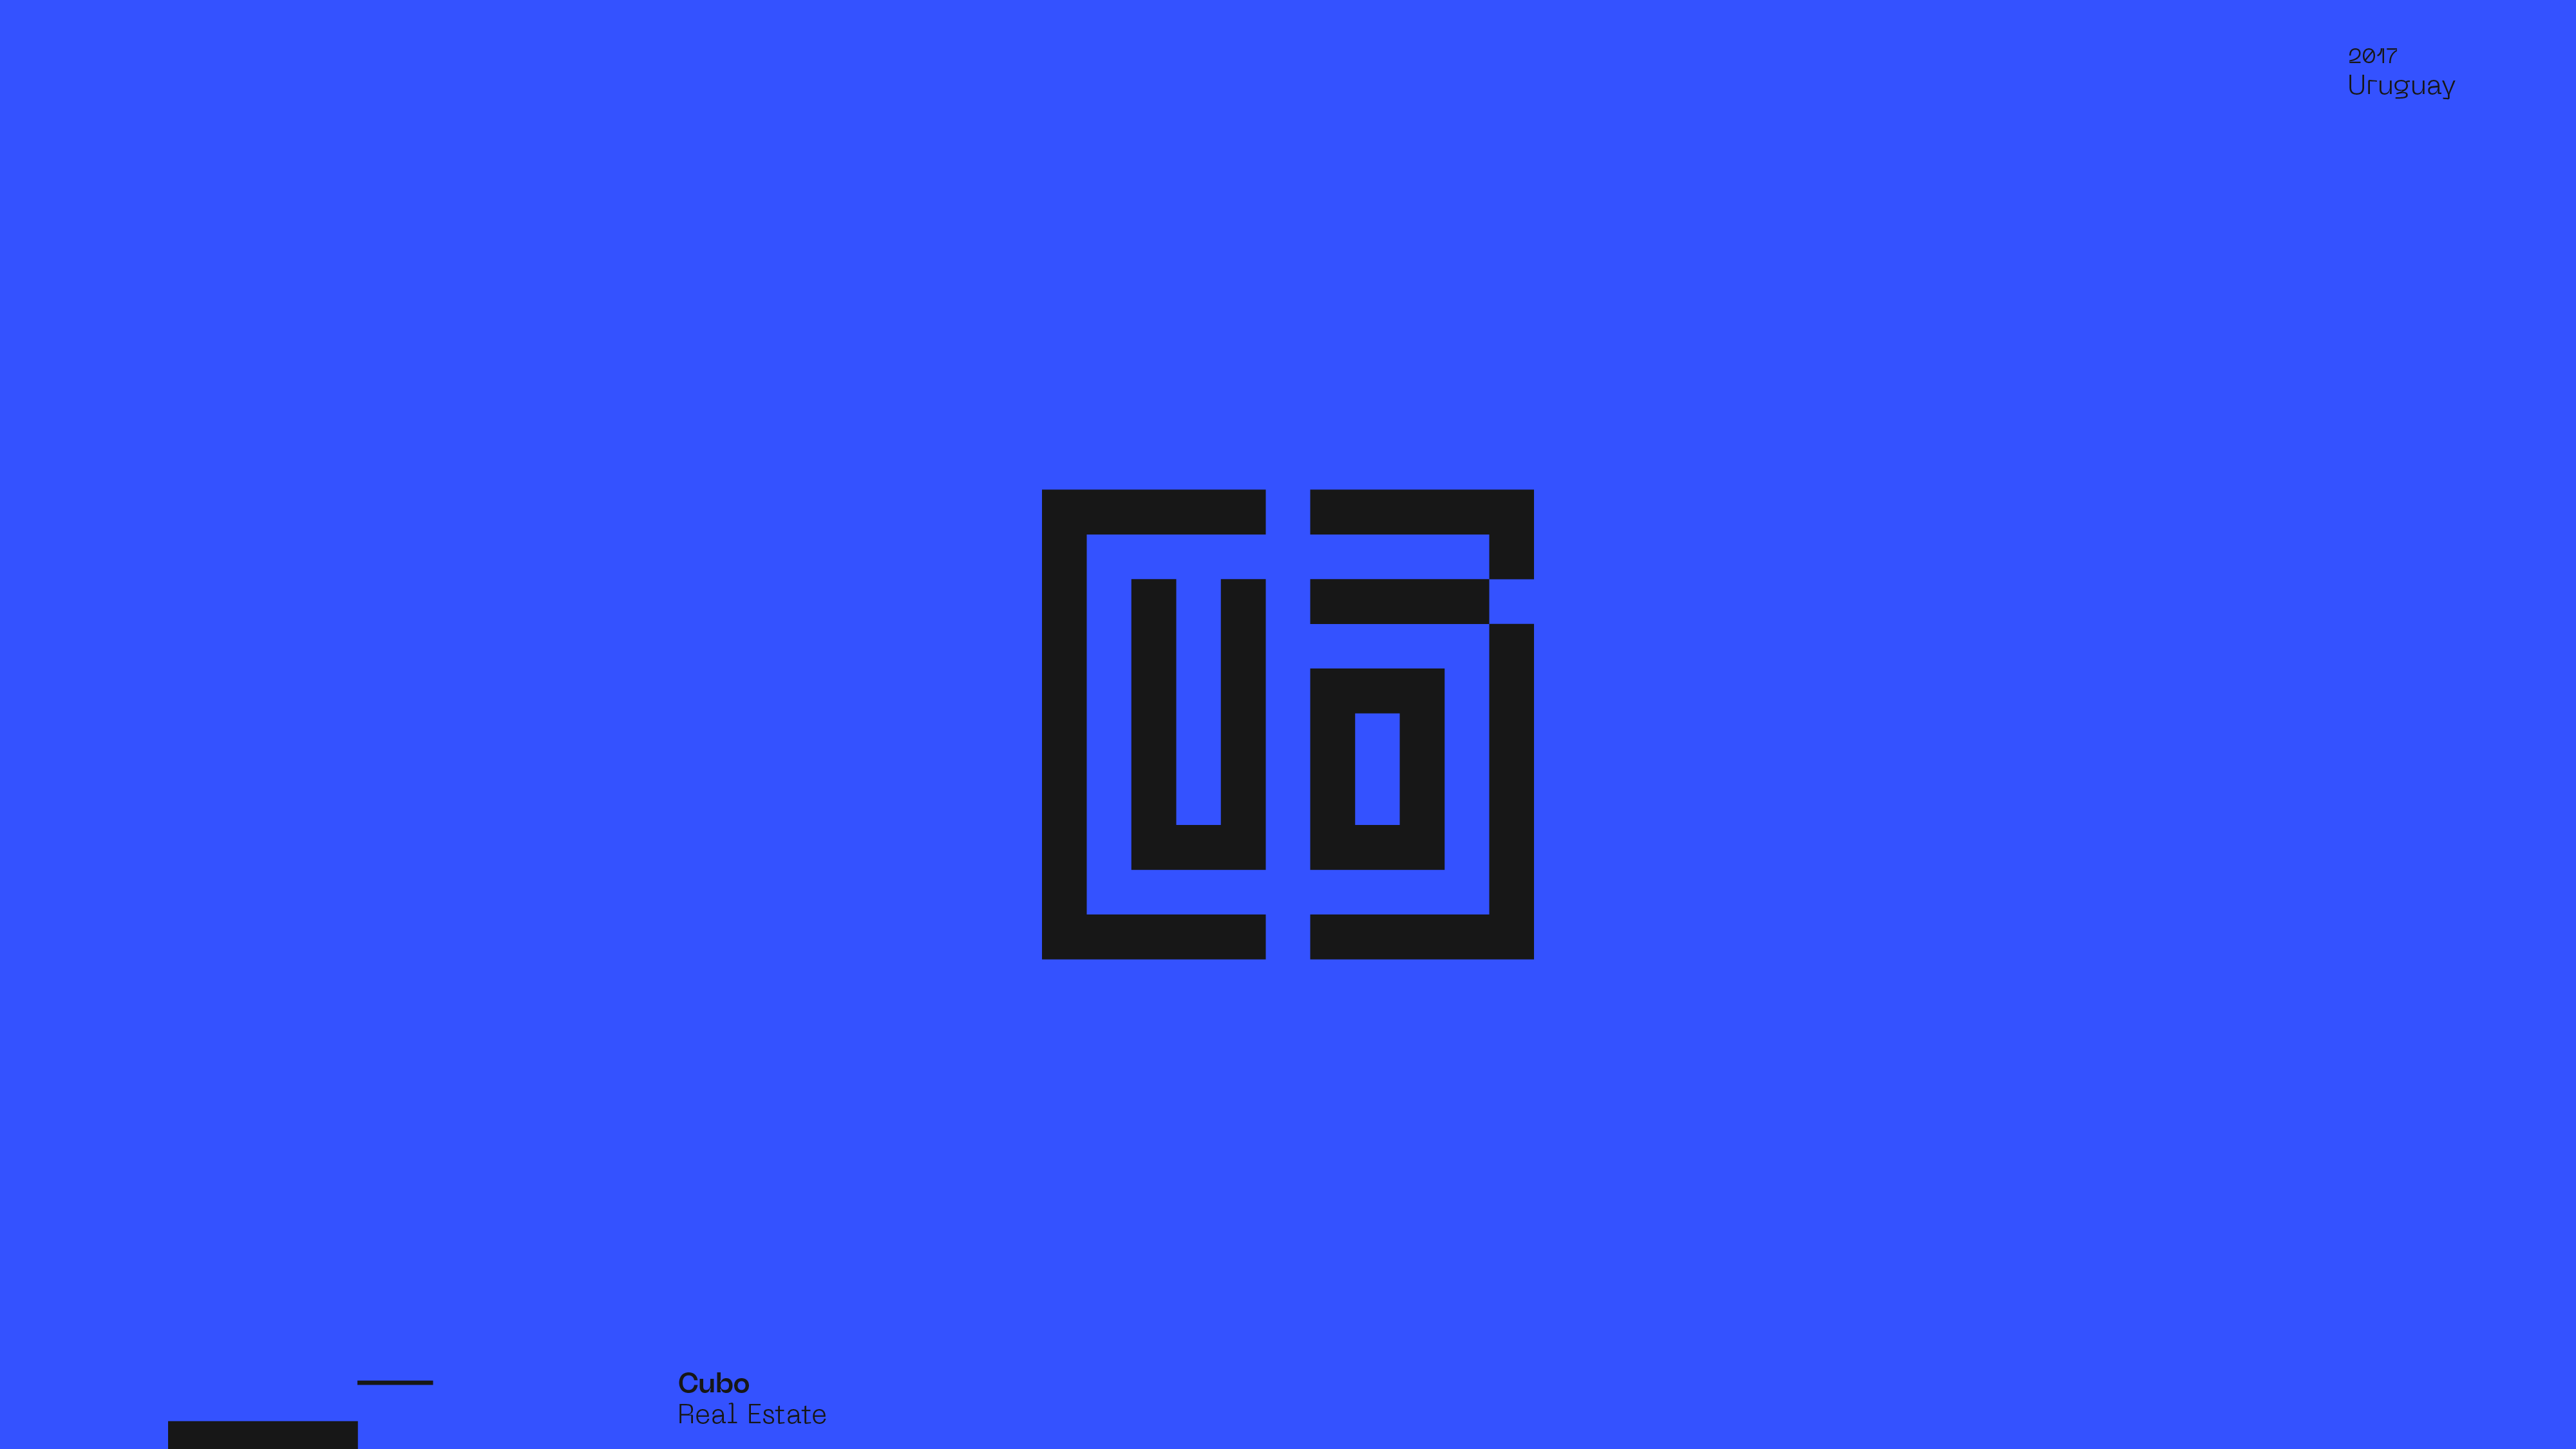 Guapo Design Studio by Esteban Ibarra Logofolio 2017 2018 logo designer —Cubo